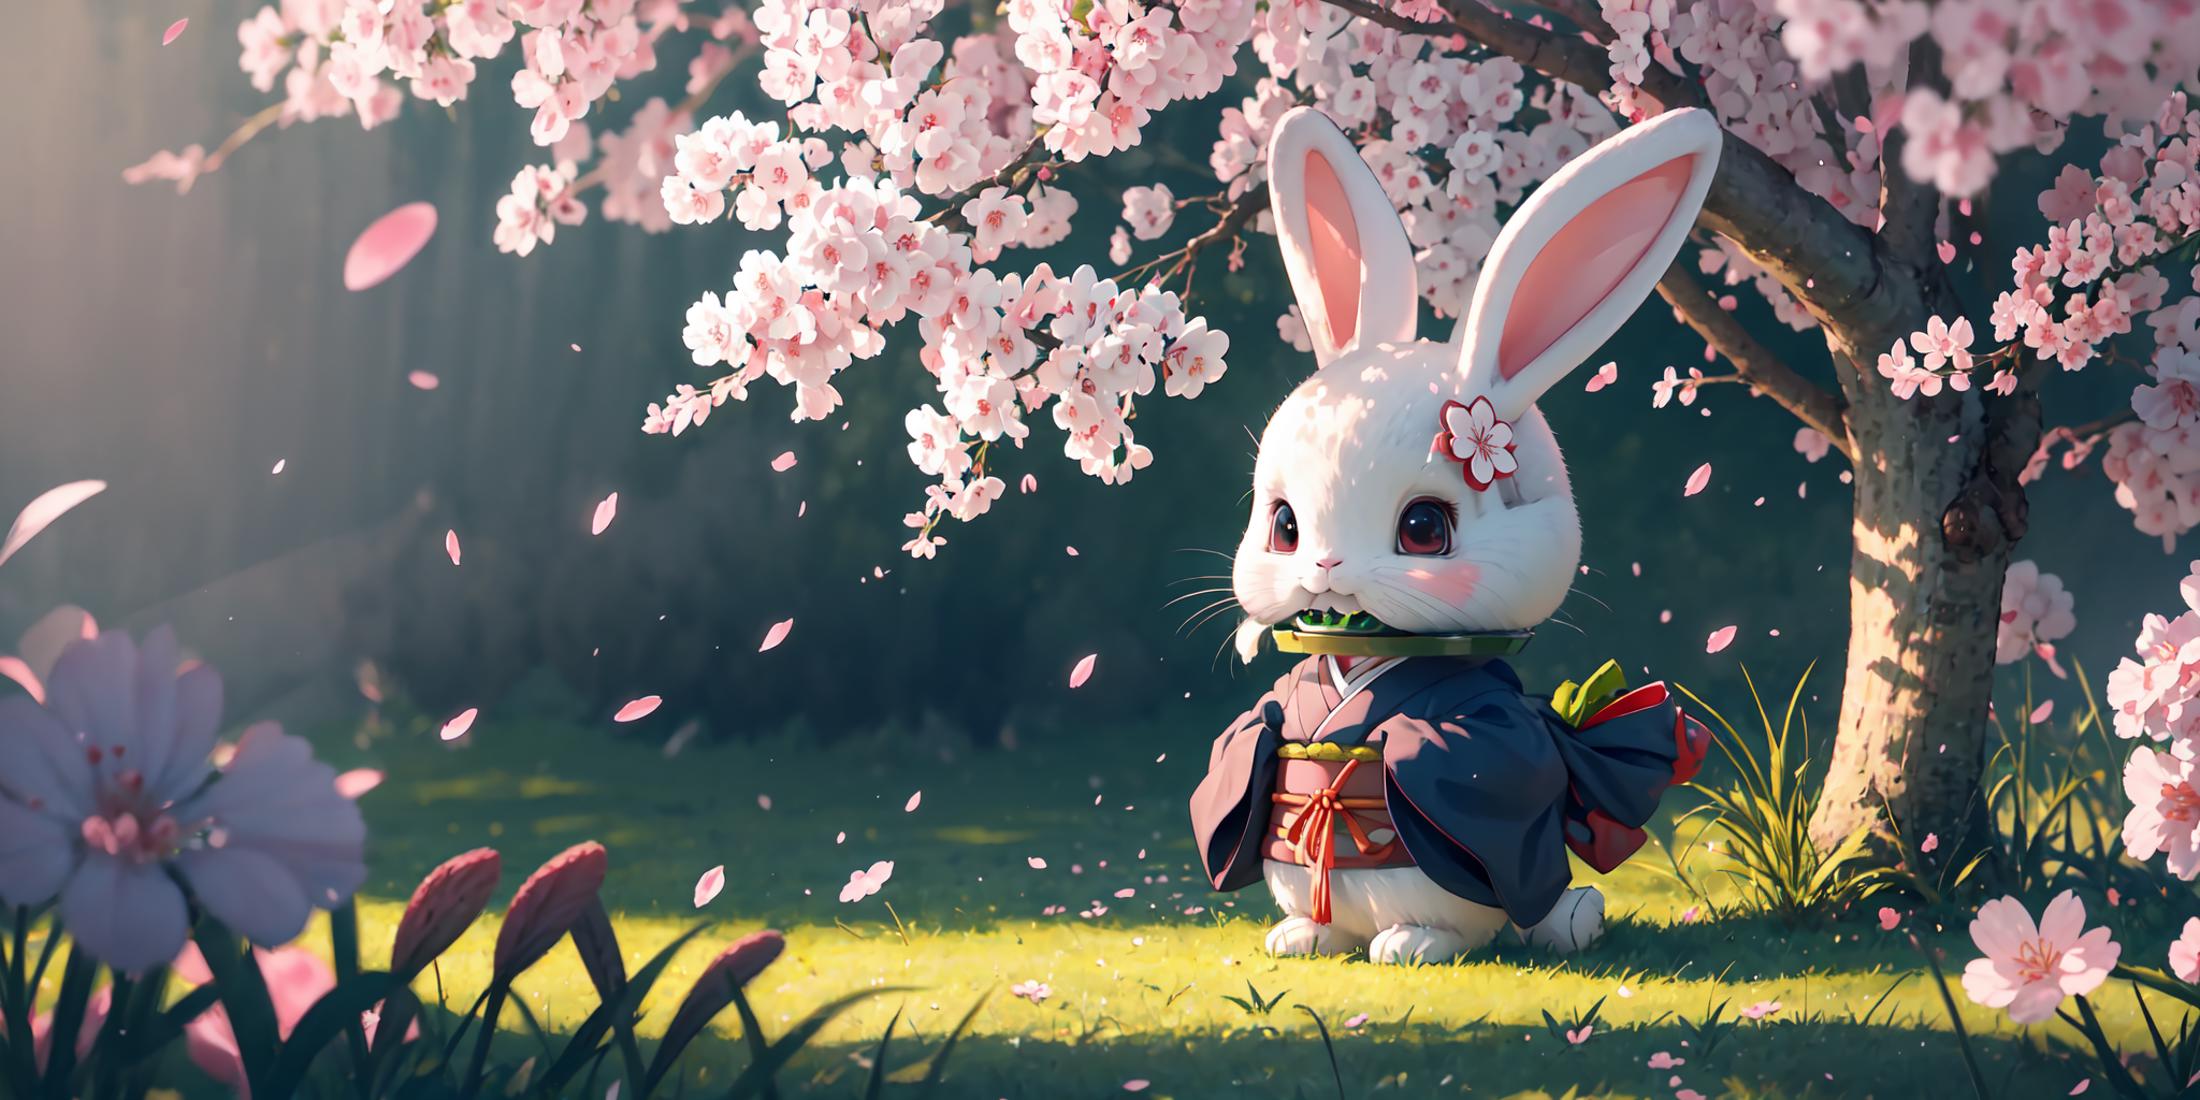 rabbit_rabbit image by Kennyluz